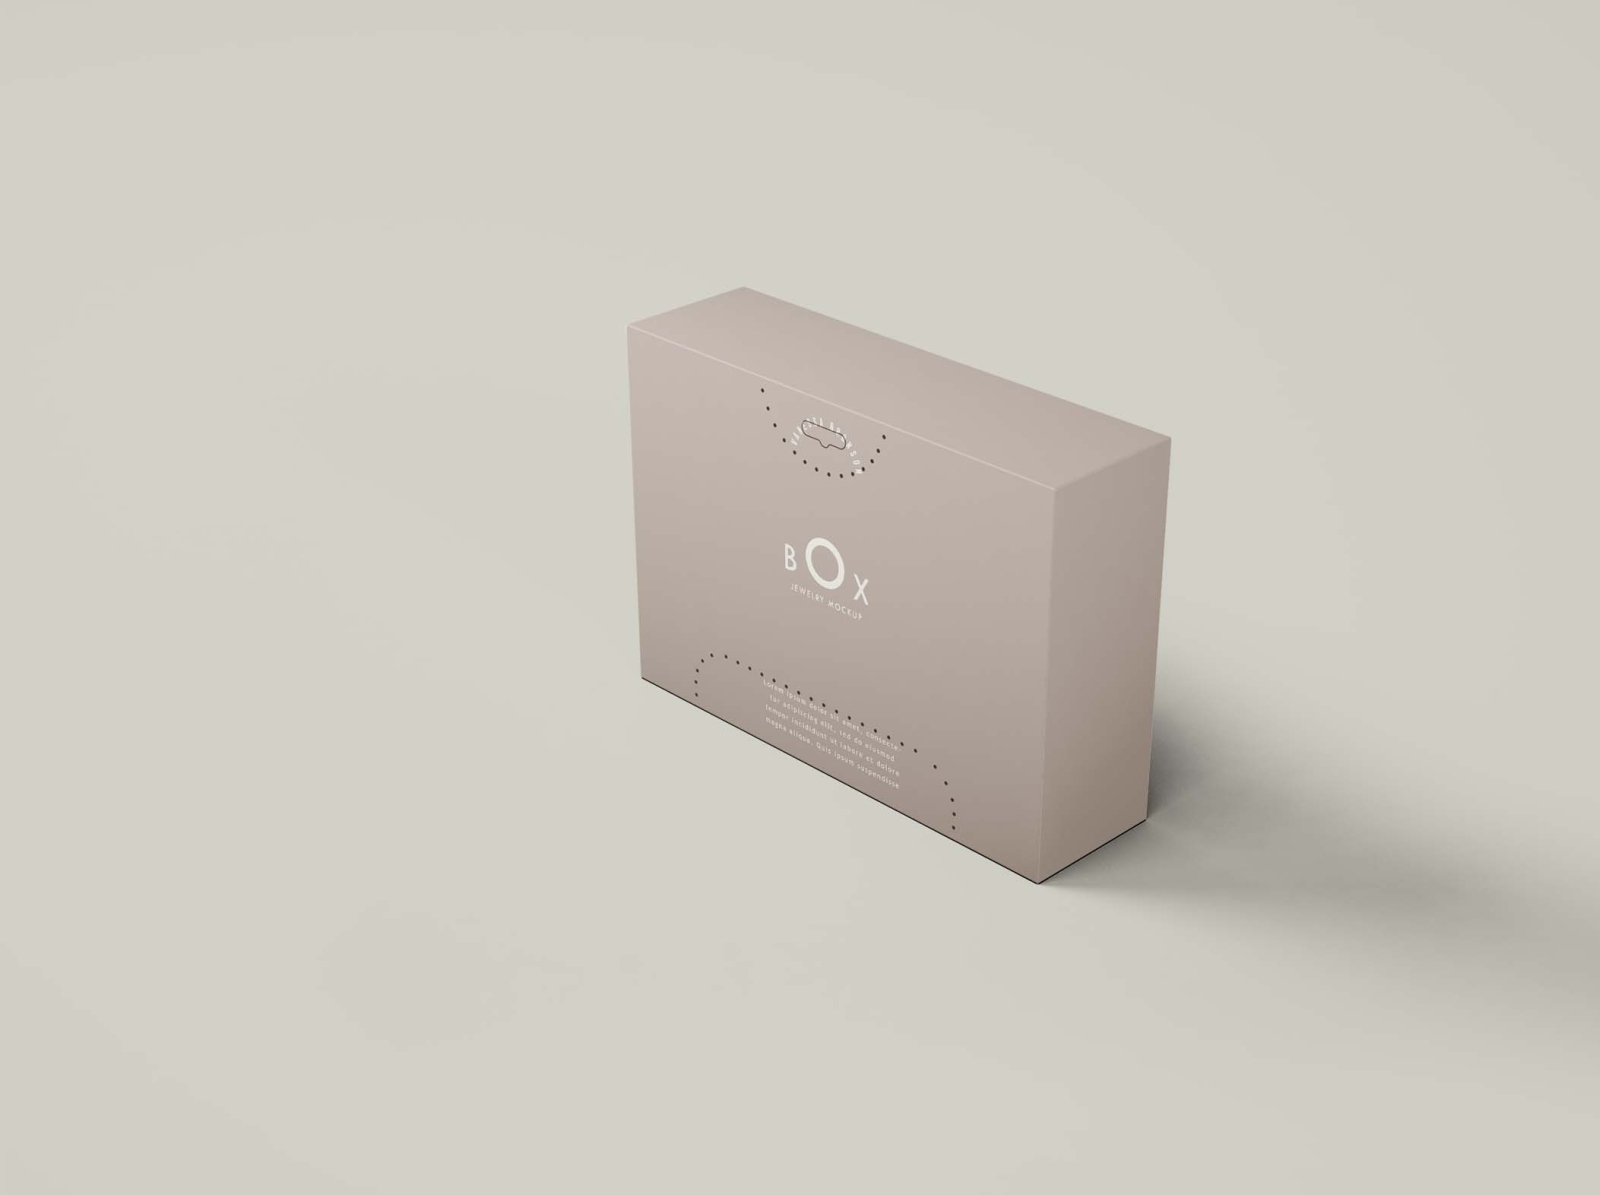 Free Luxury Packaging Box Mockup Template by Arun Kumar on Dribbble